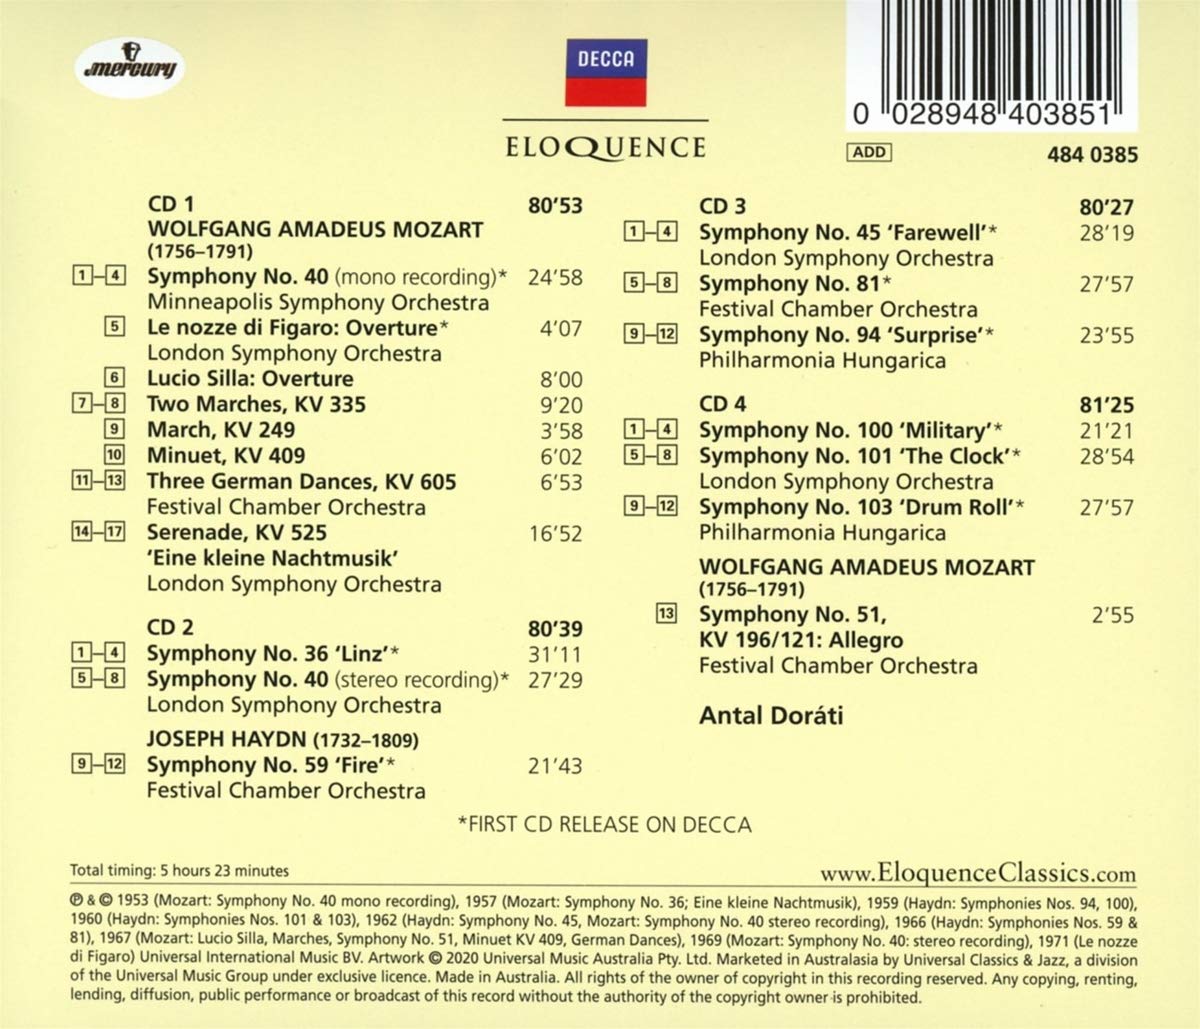 Antal Dorati 모차르트 / 하이든: 레코딩 - 안탈 도라티 (Mozart / Haydn : Recordings On Mercury Living Presence)